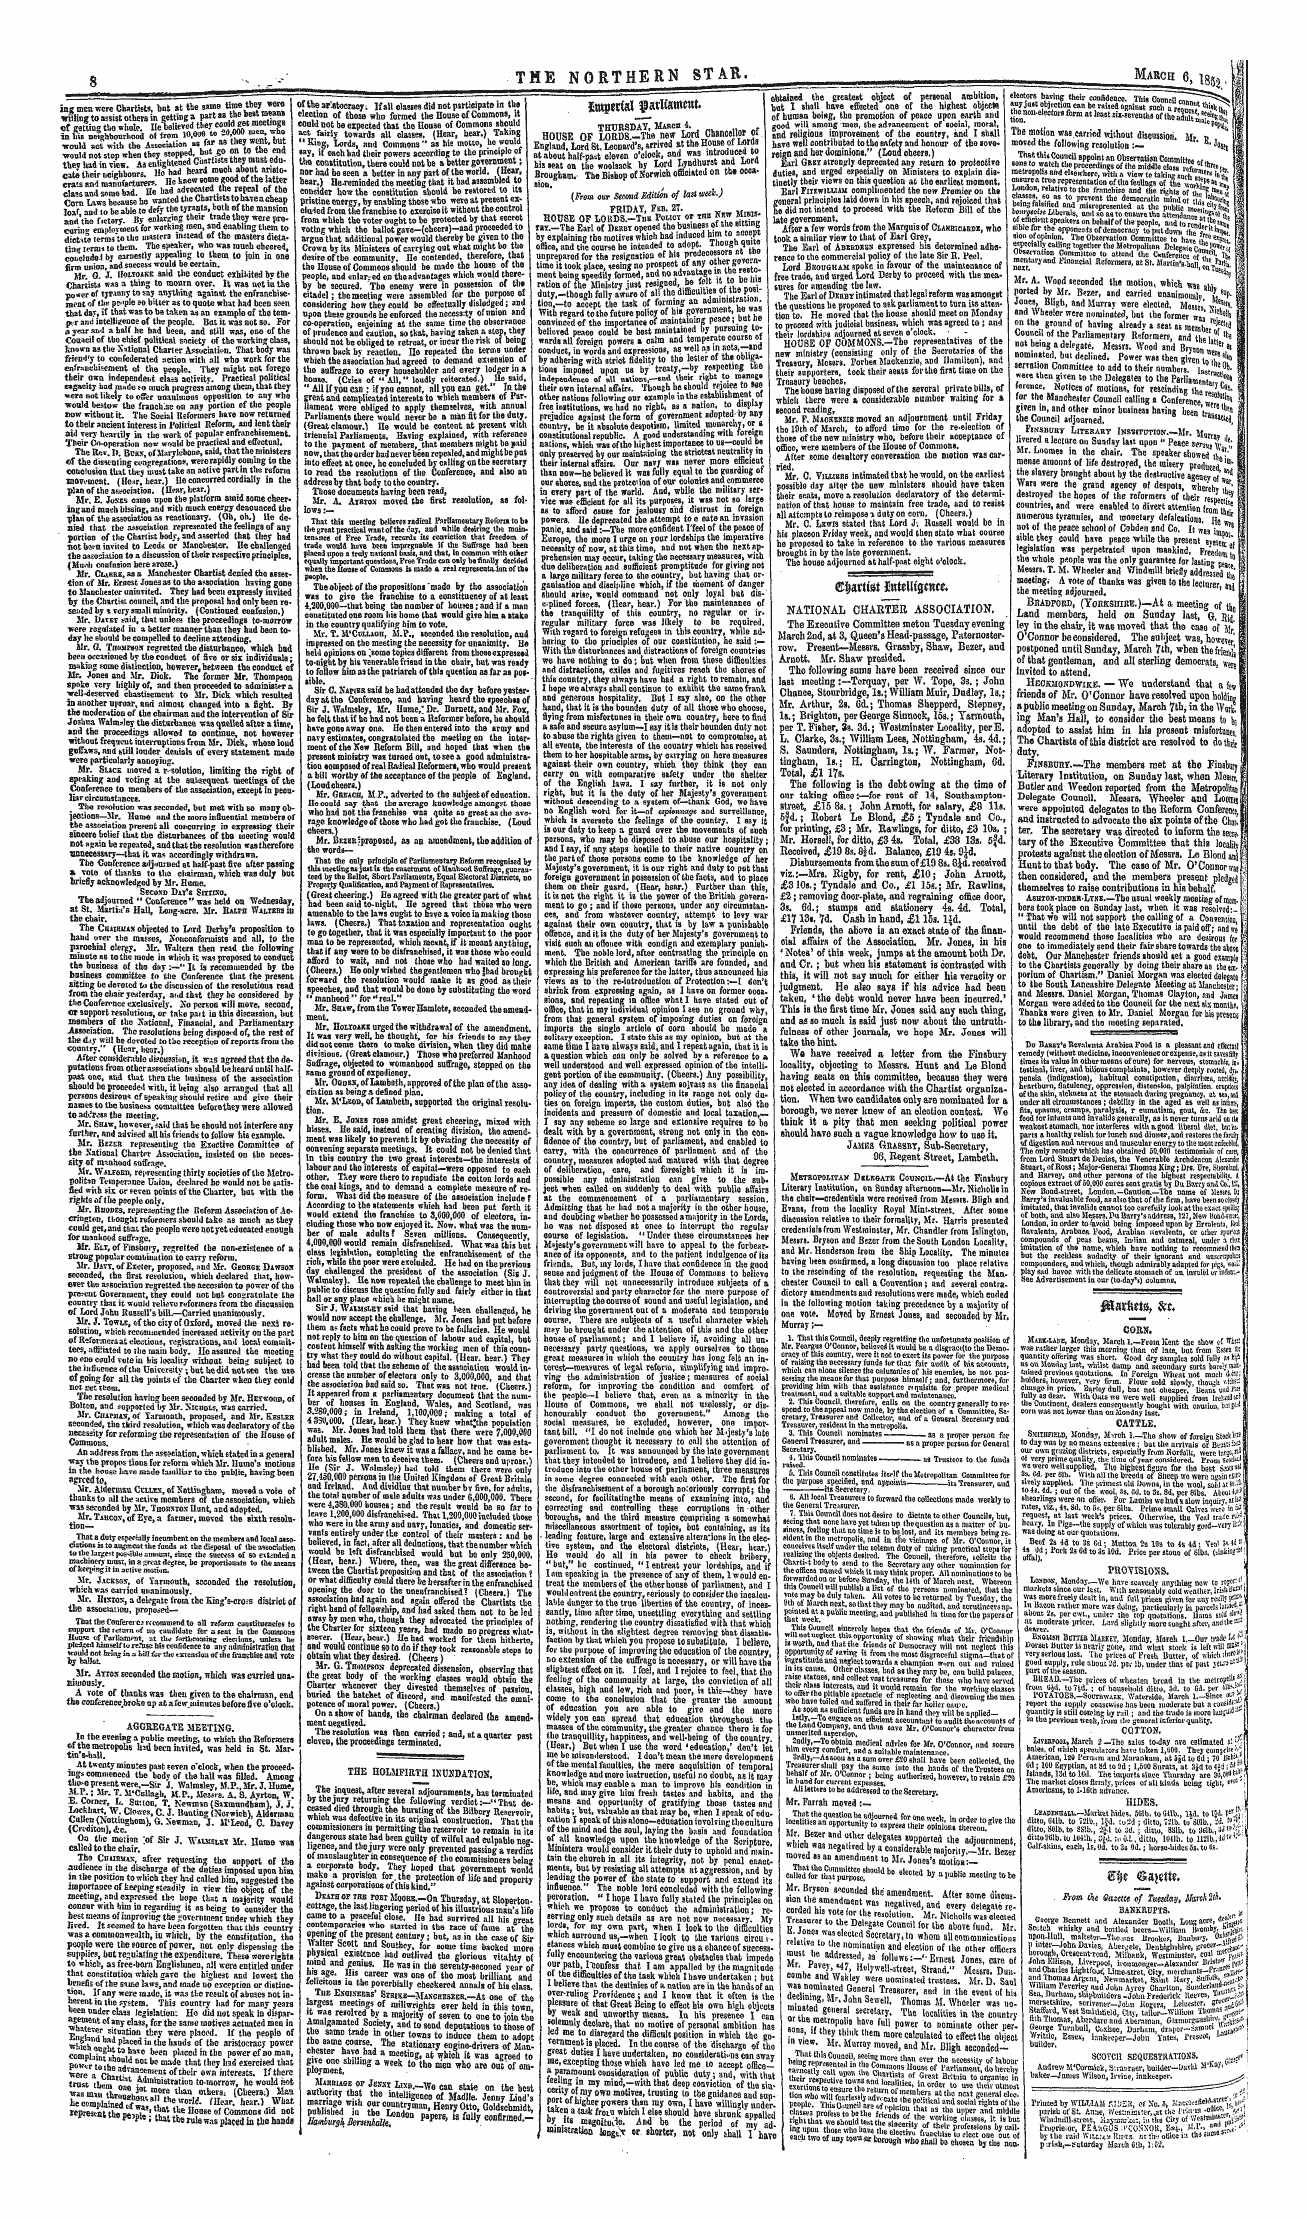 Northern Star (1837-1852): jS F Y, 1st edition - Grije €Iajctte. \